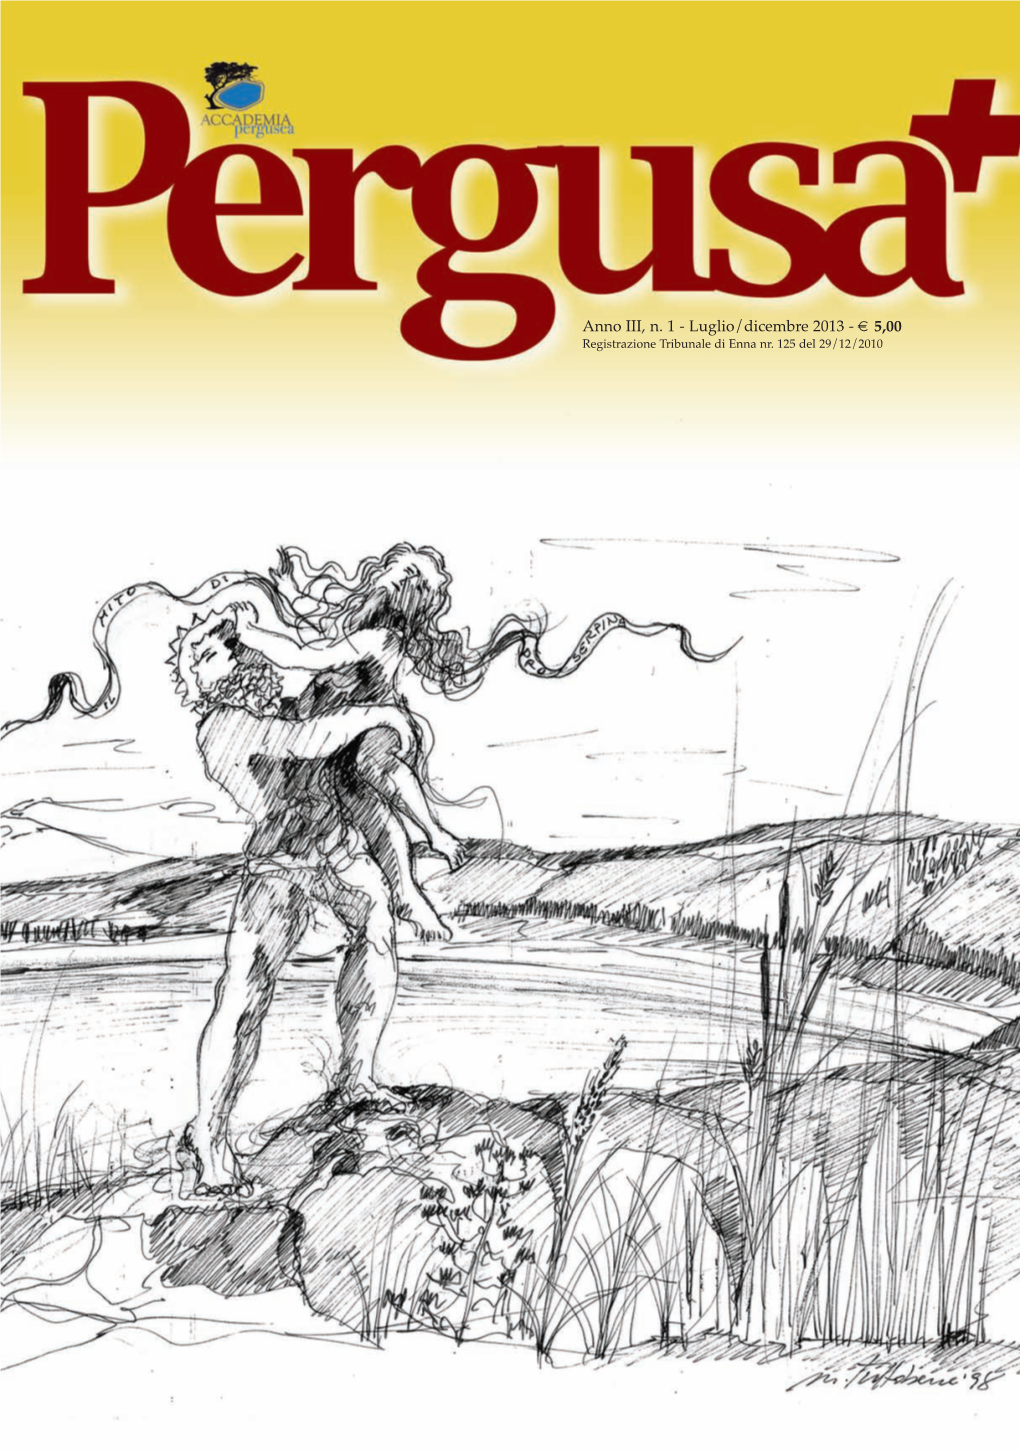 Pergusa+2013 Ultimo:Layout 1 12/09/13 11:33 Pagina 1